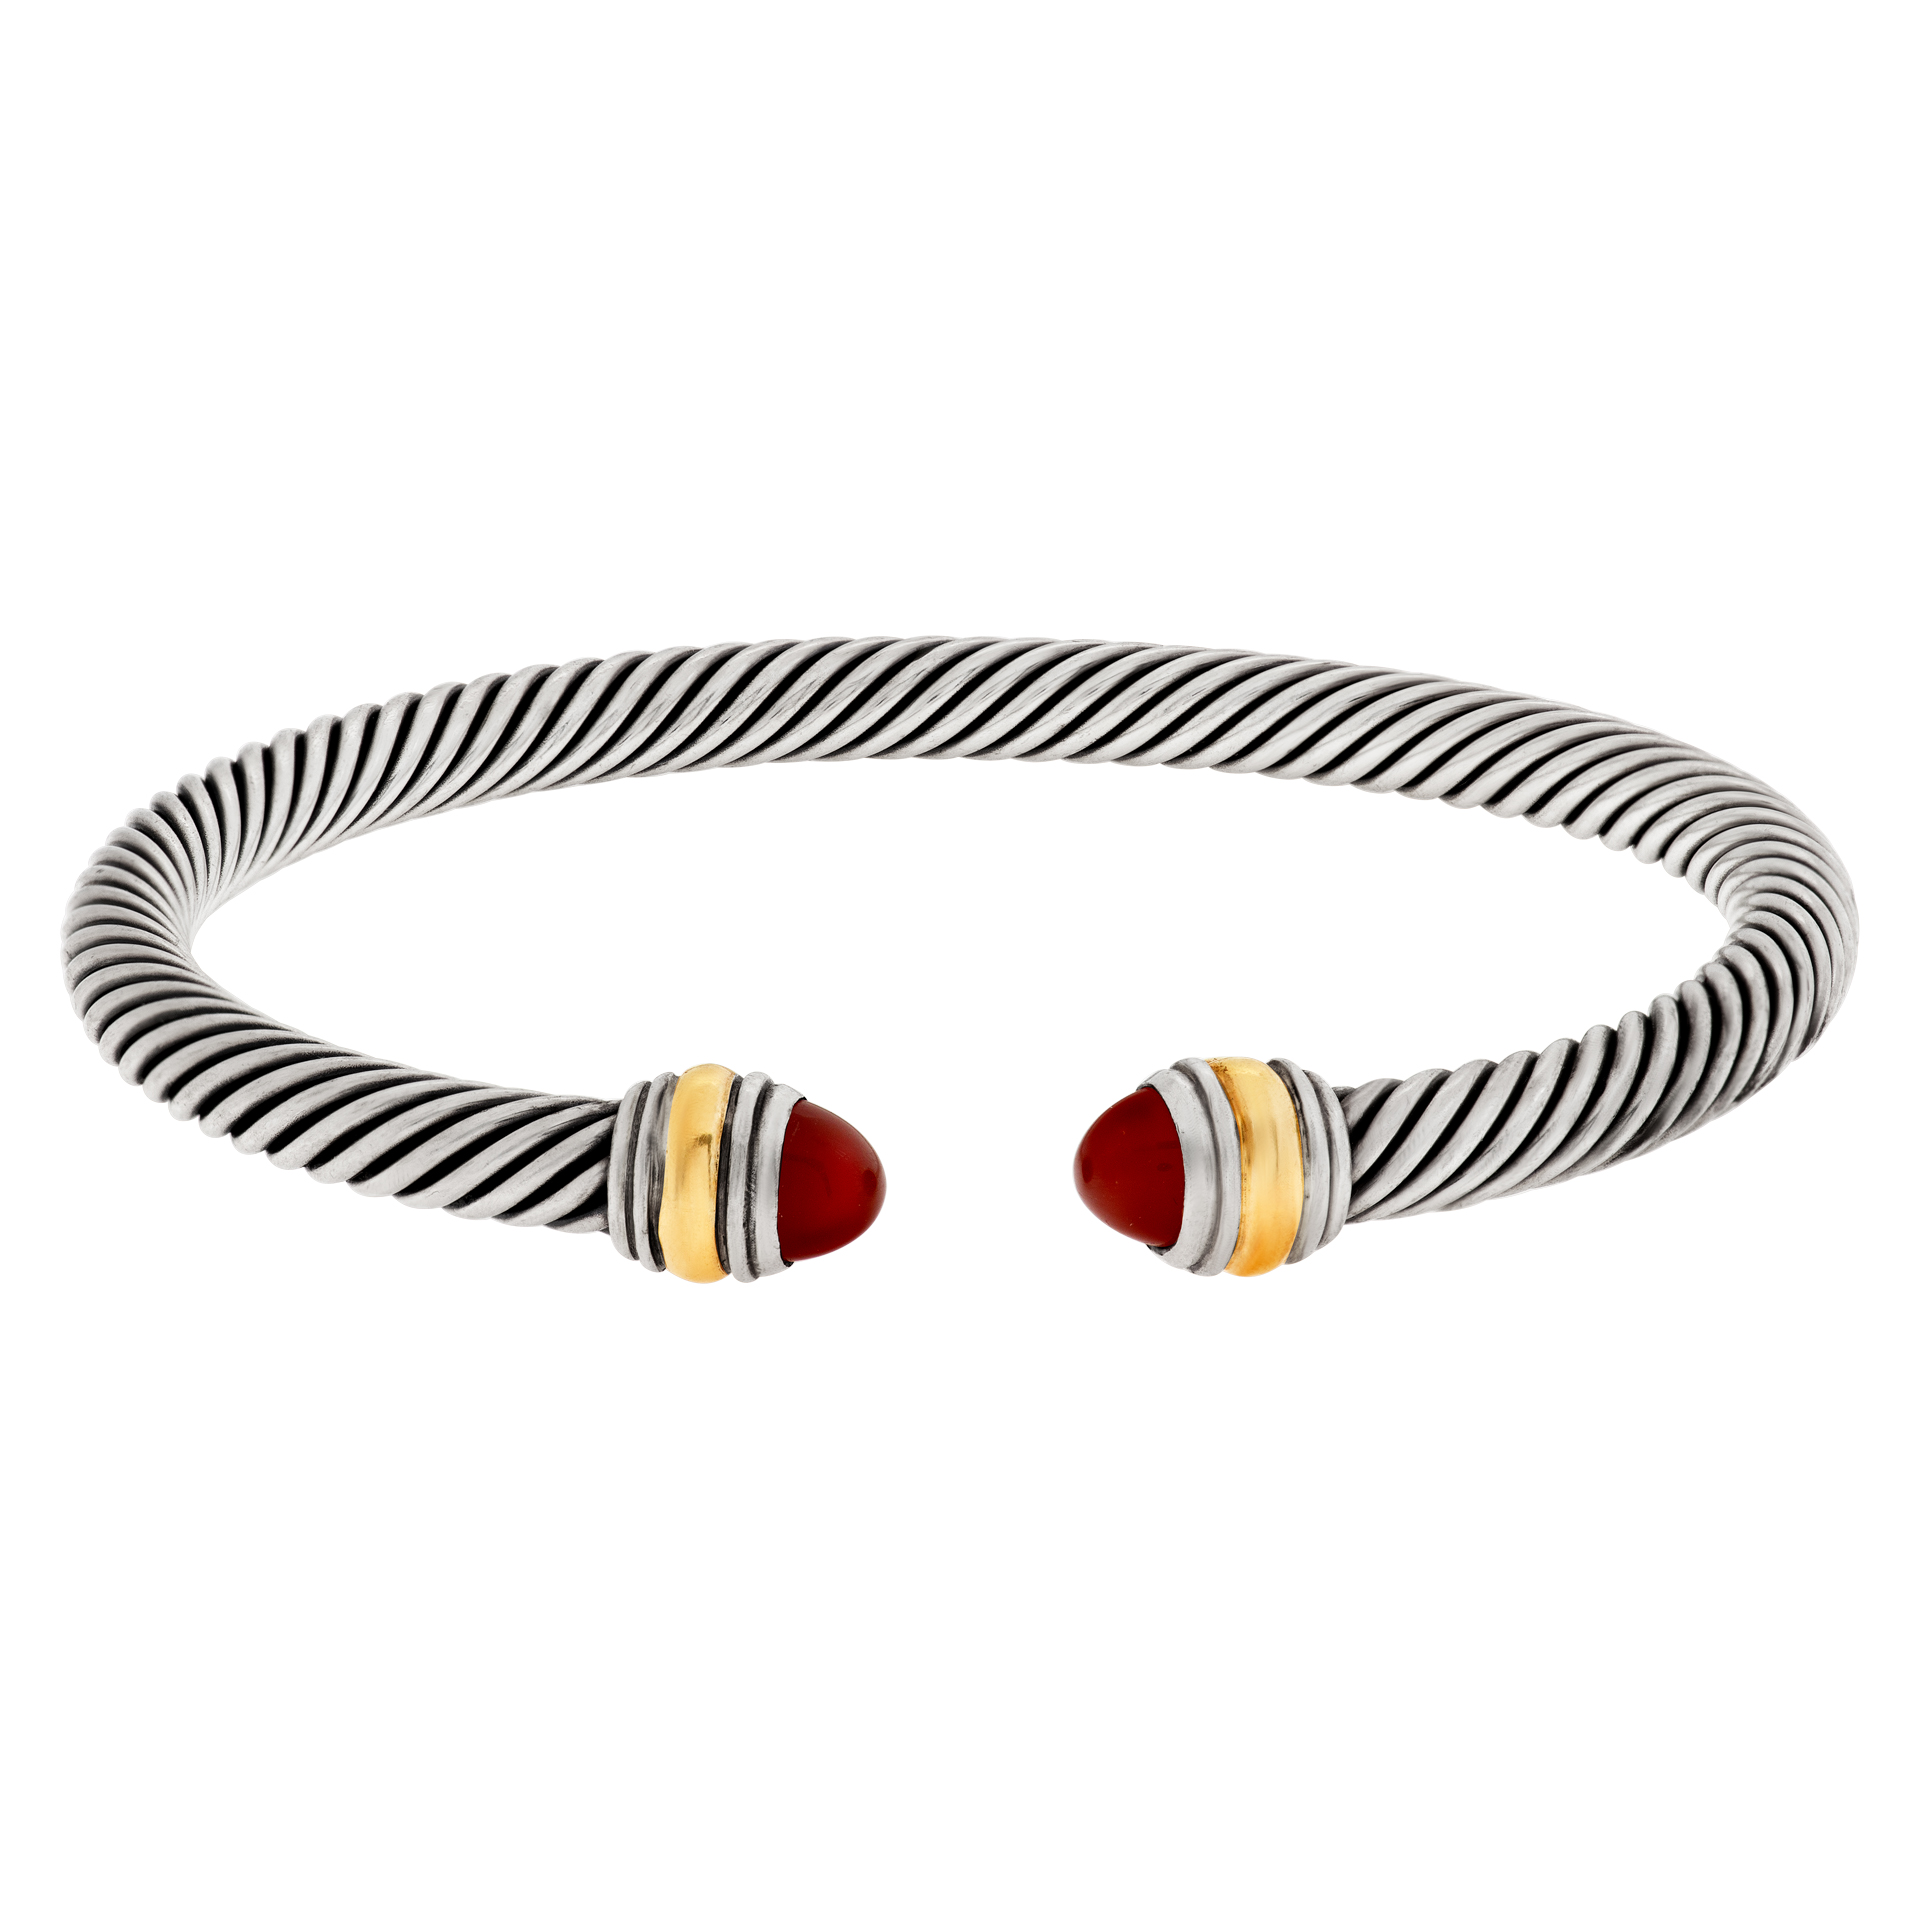 David Yurman cable cuff bracelet